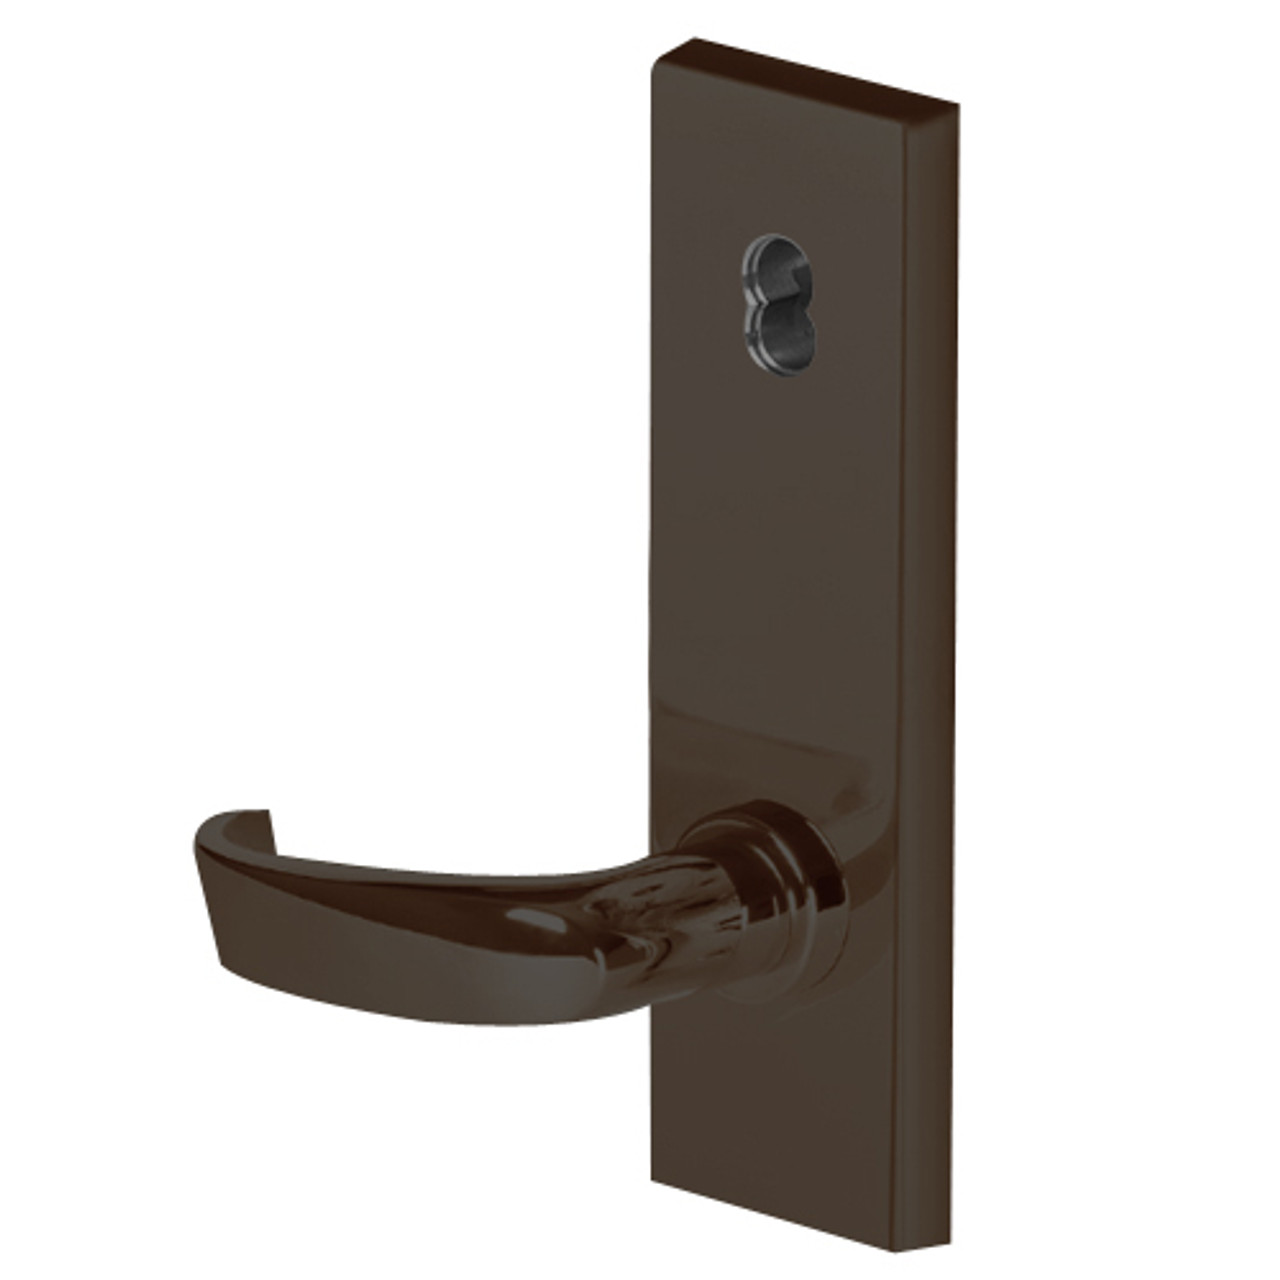 45HW7TDEL14N613RQE12V Best 40HW series Single Key Deadbolt Fail Safe Electromechanical Mortise Lever Lock with Curved w/ Return Style in Oil Rubbed Bronze